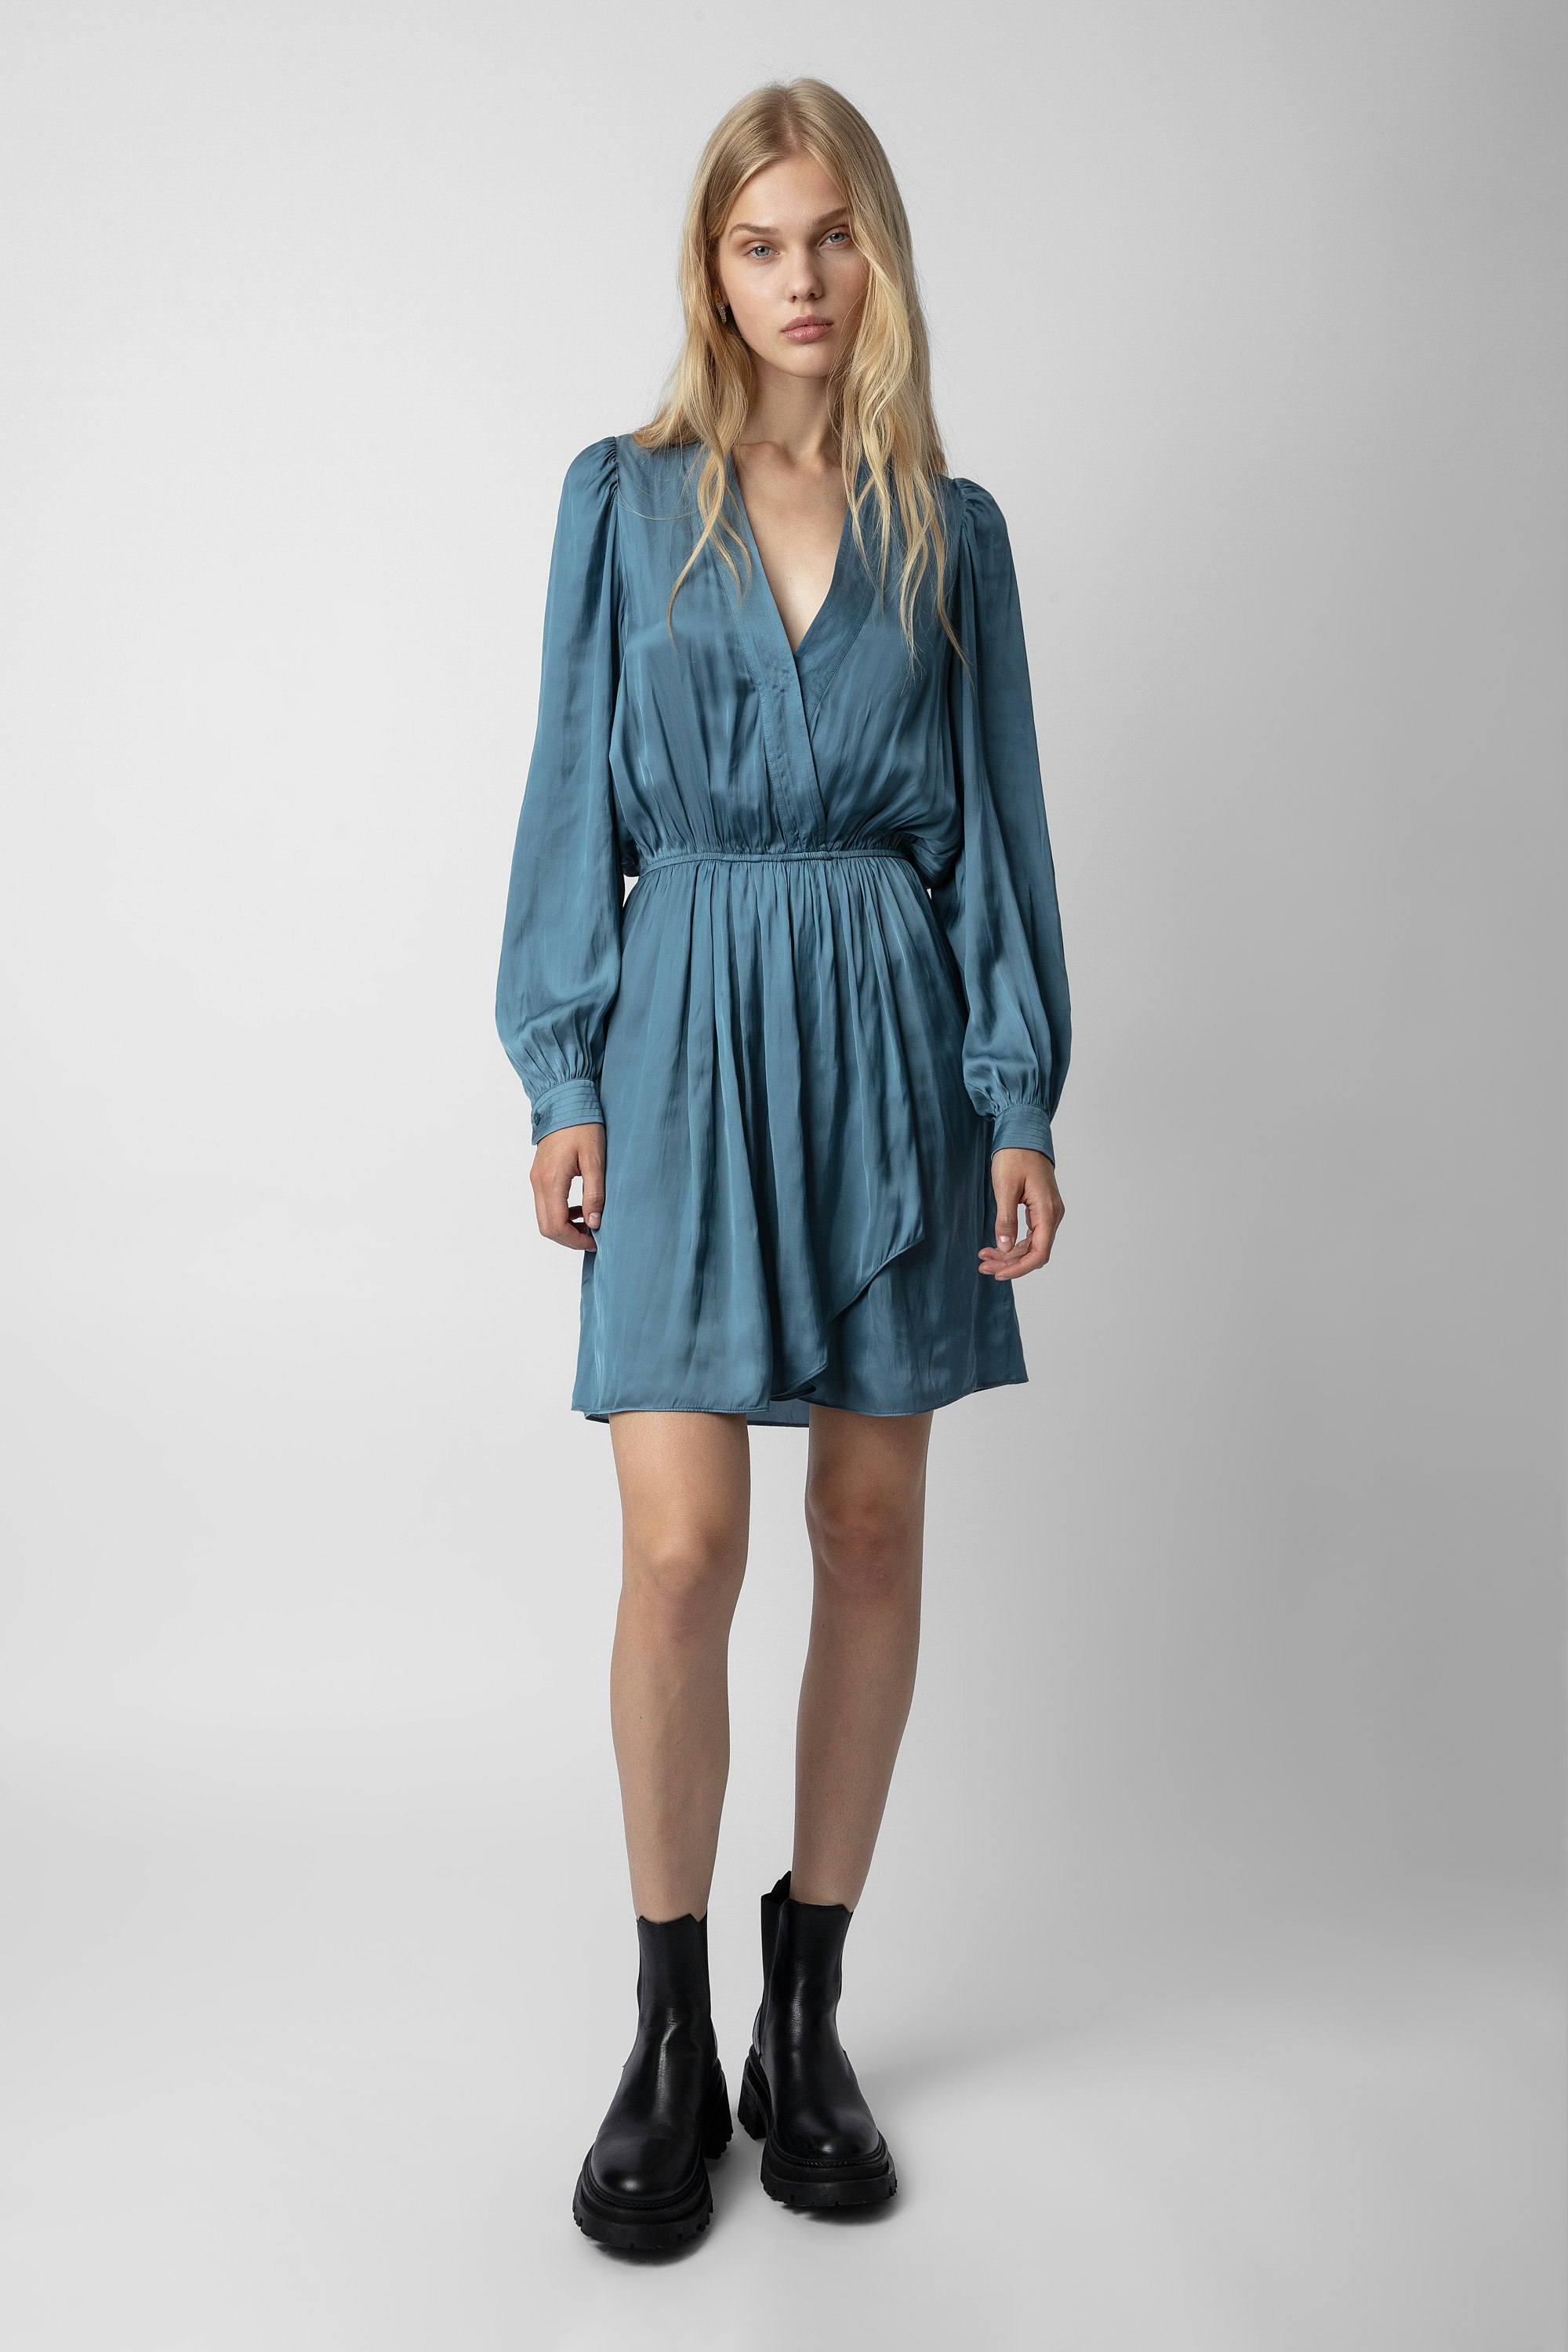 Remember Satin Dress - Women’s short sky blue satin dress with draped skirt